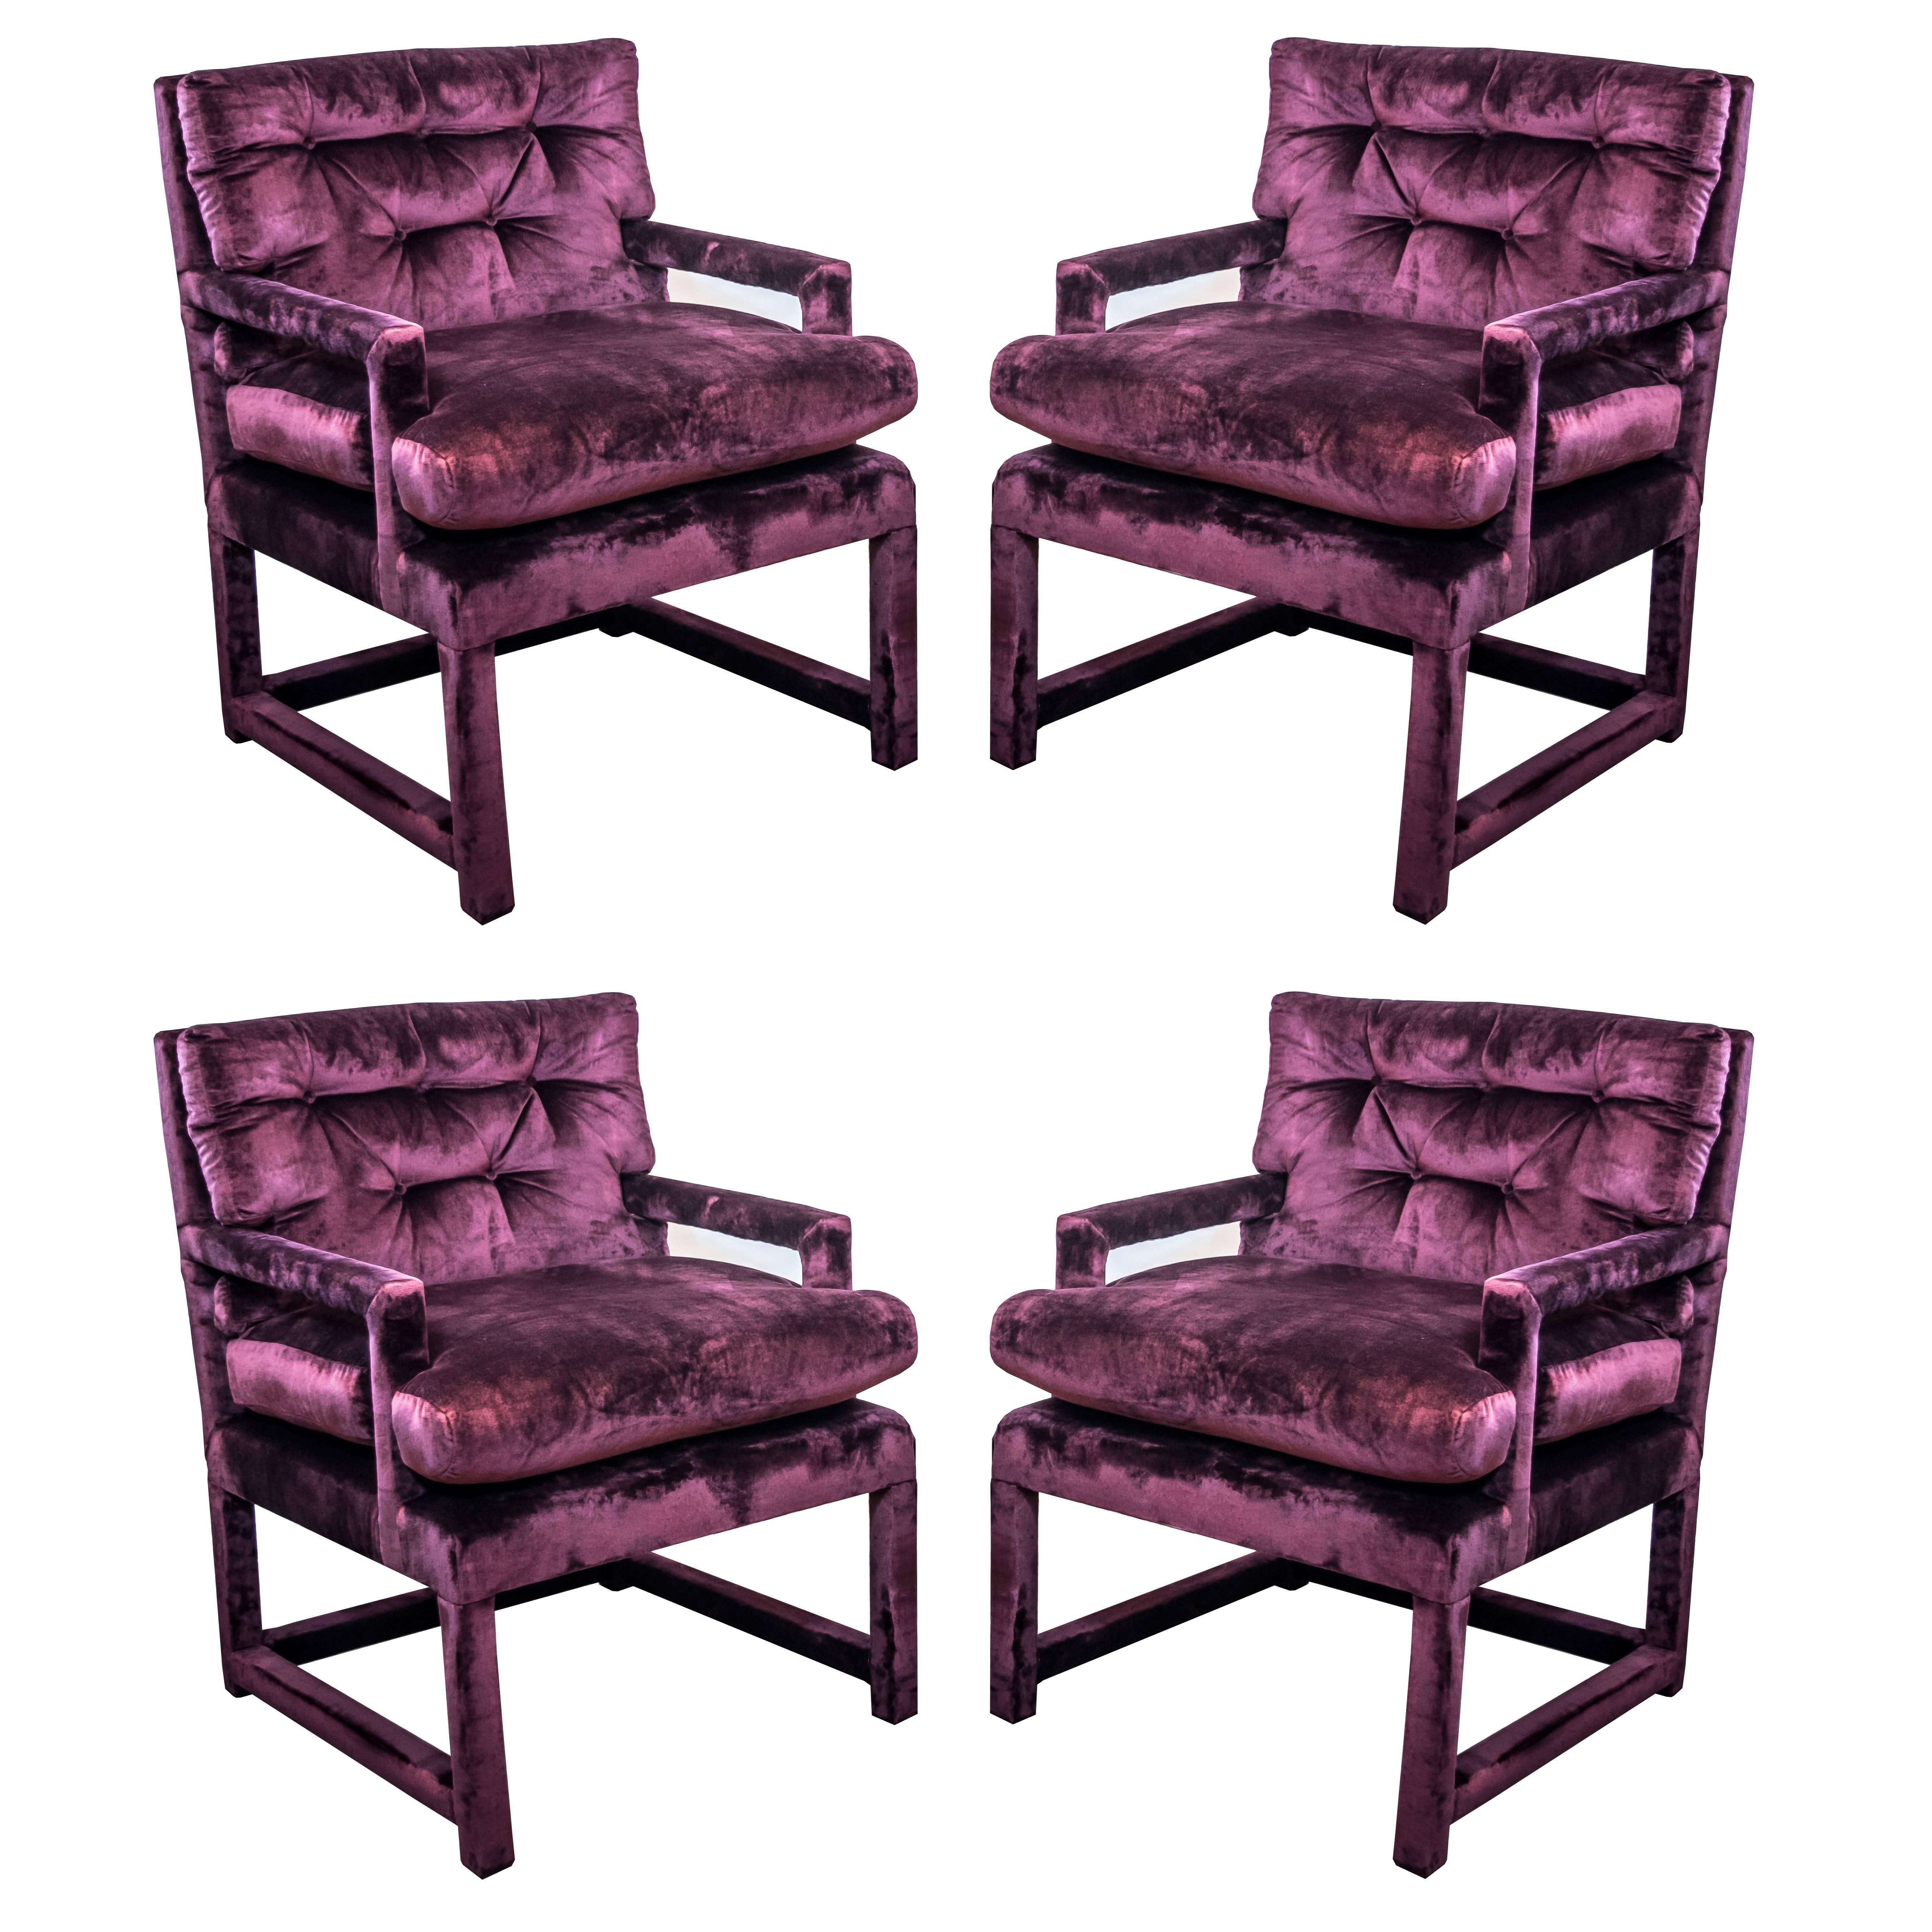 Set of Four Milo Baughman Parsons Chairs in Luxurious Garnet Velvet